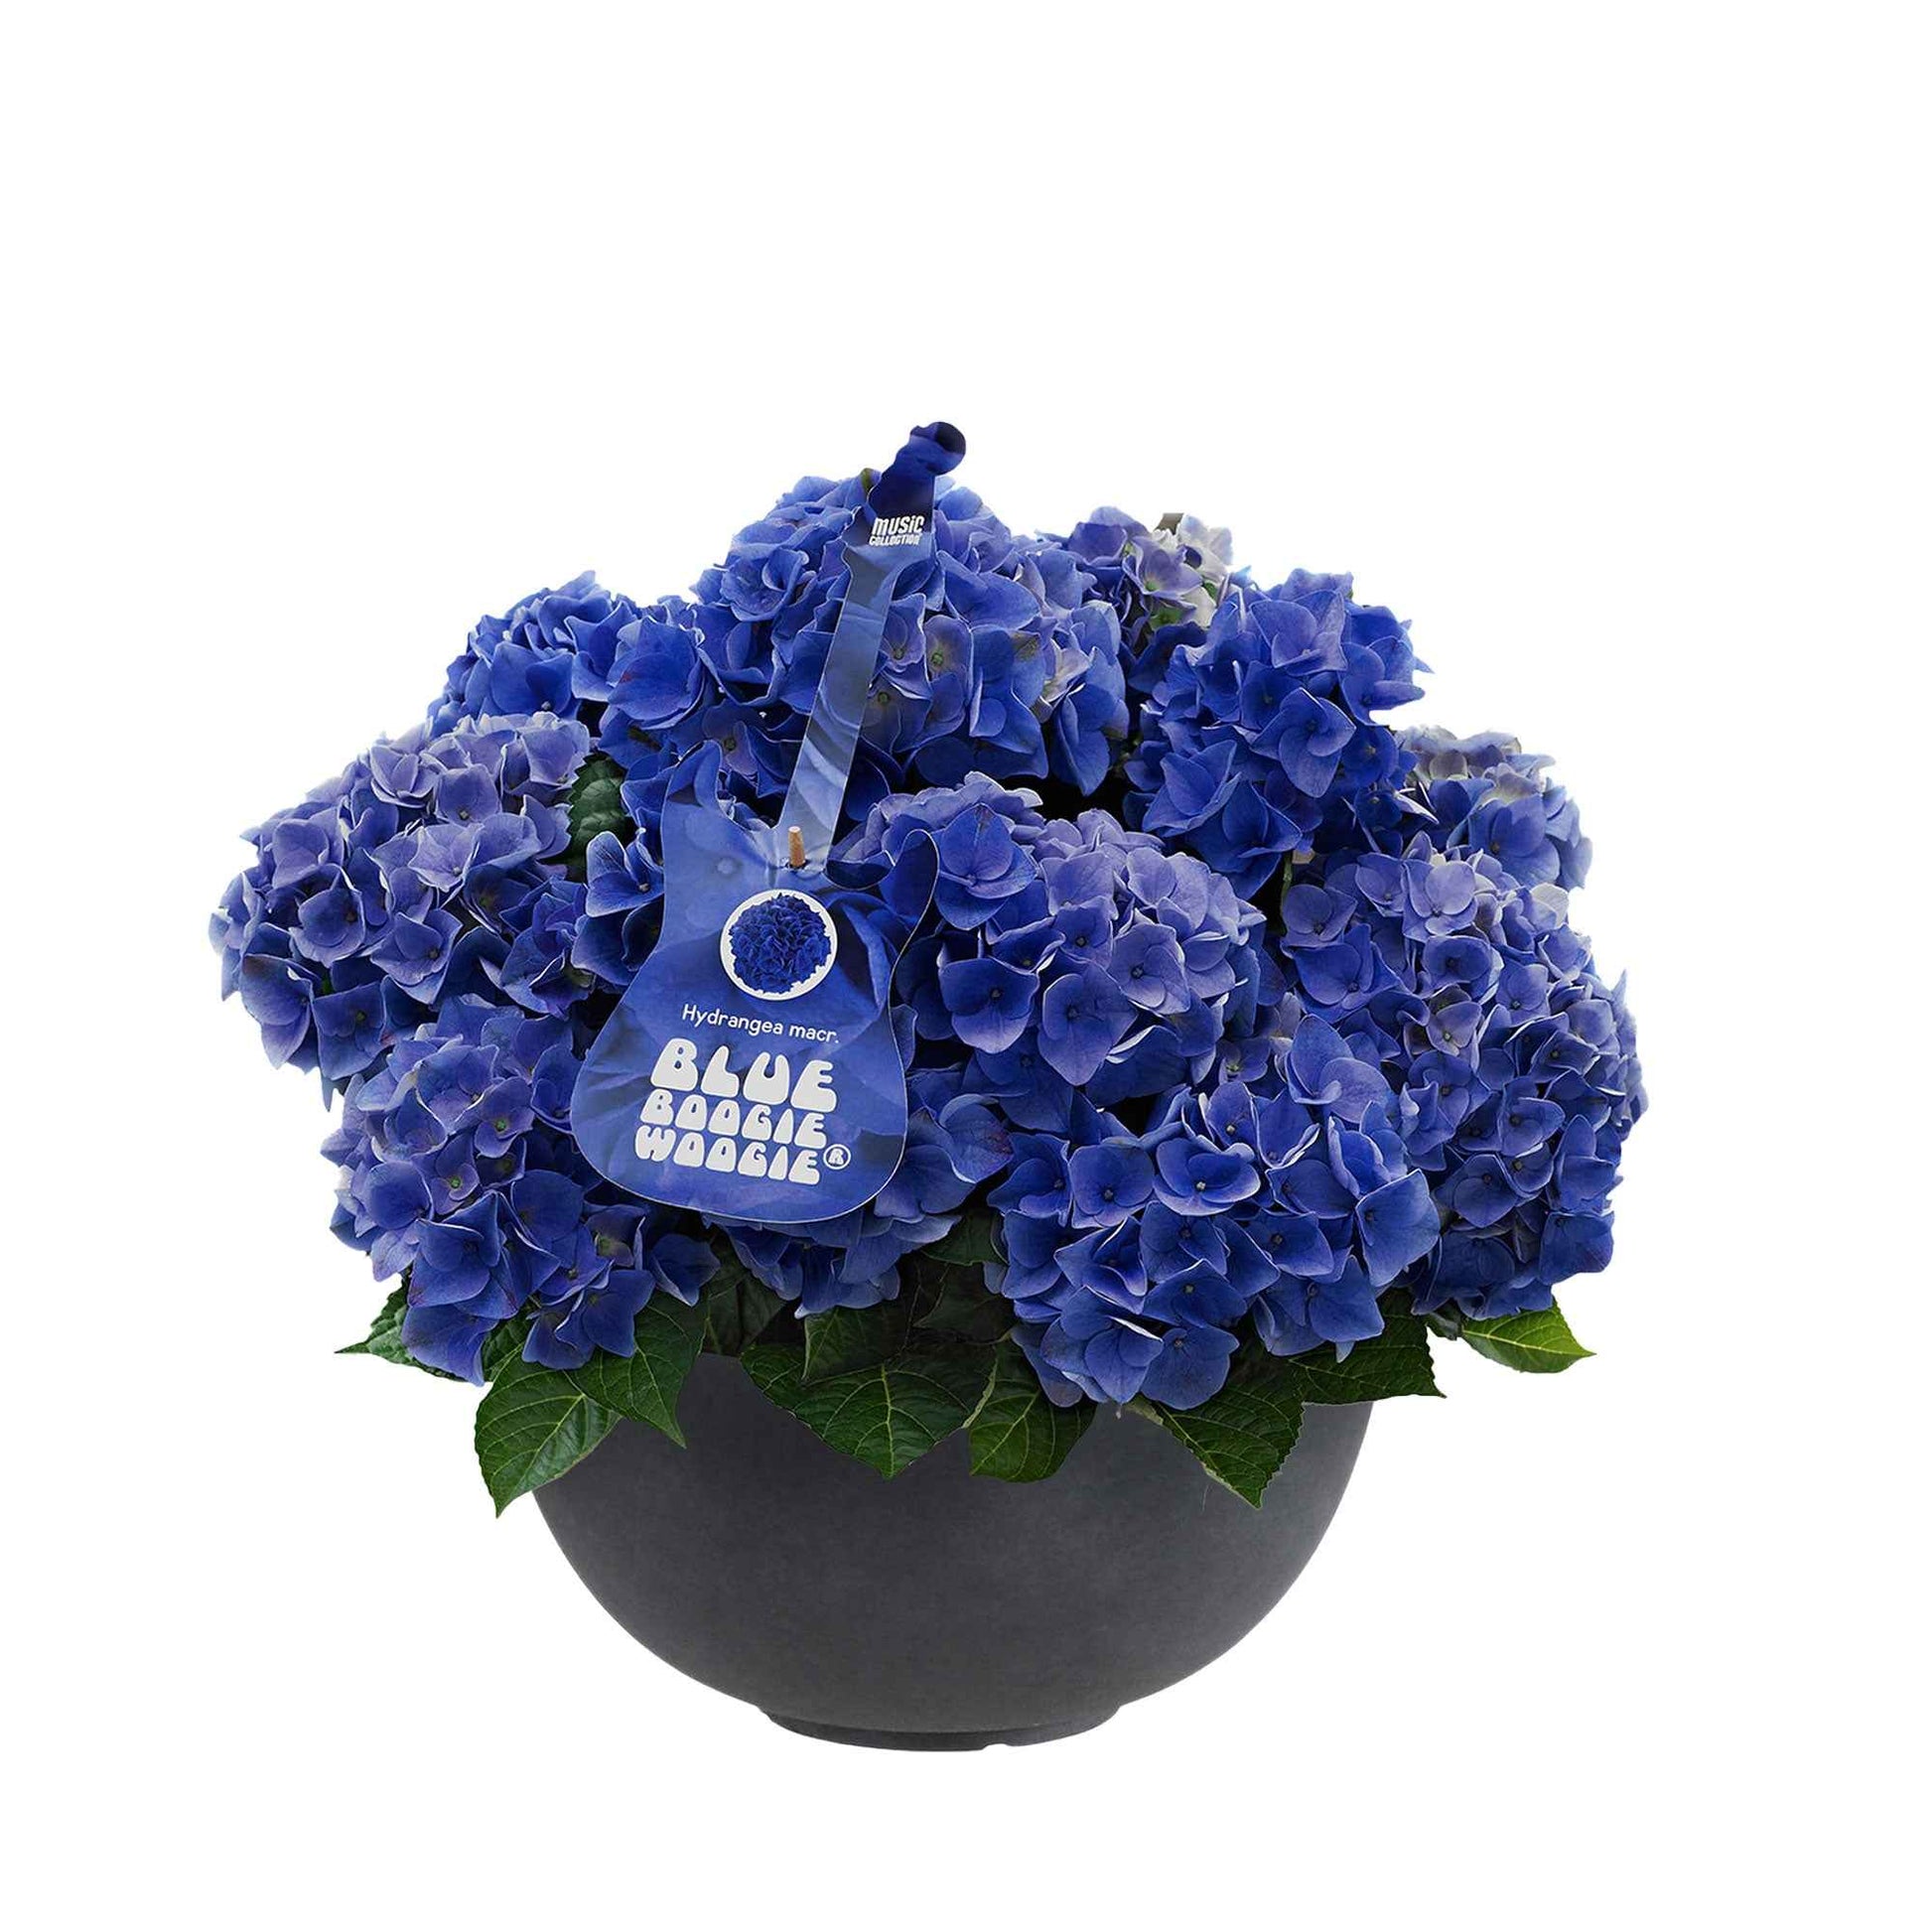 Hortensia paysan Hydrangea 'Blue Boogiewoogie'® Bleu avec plateau anthracite - Arbustes